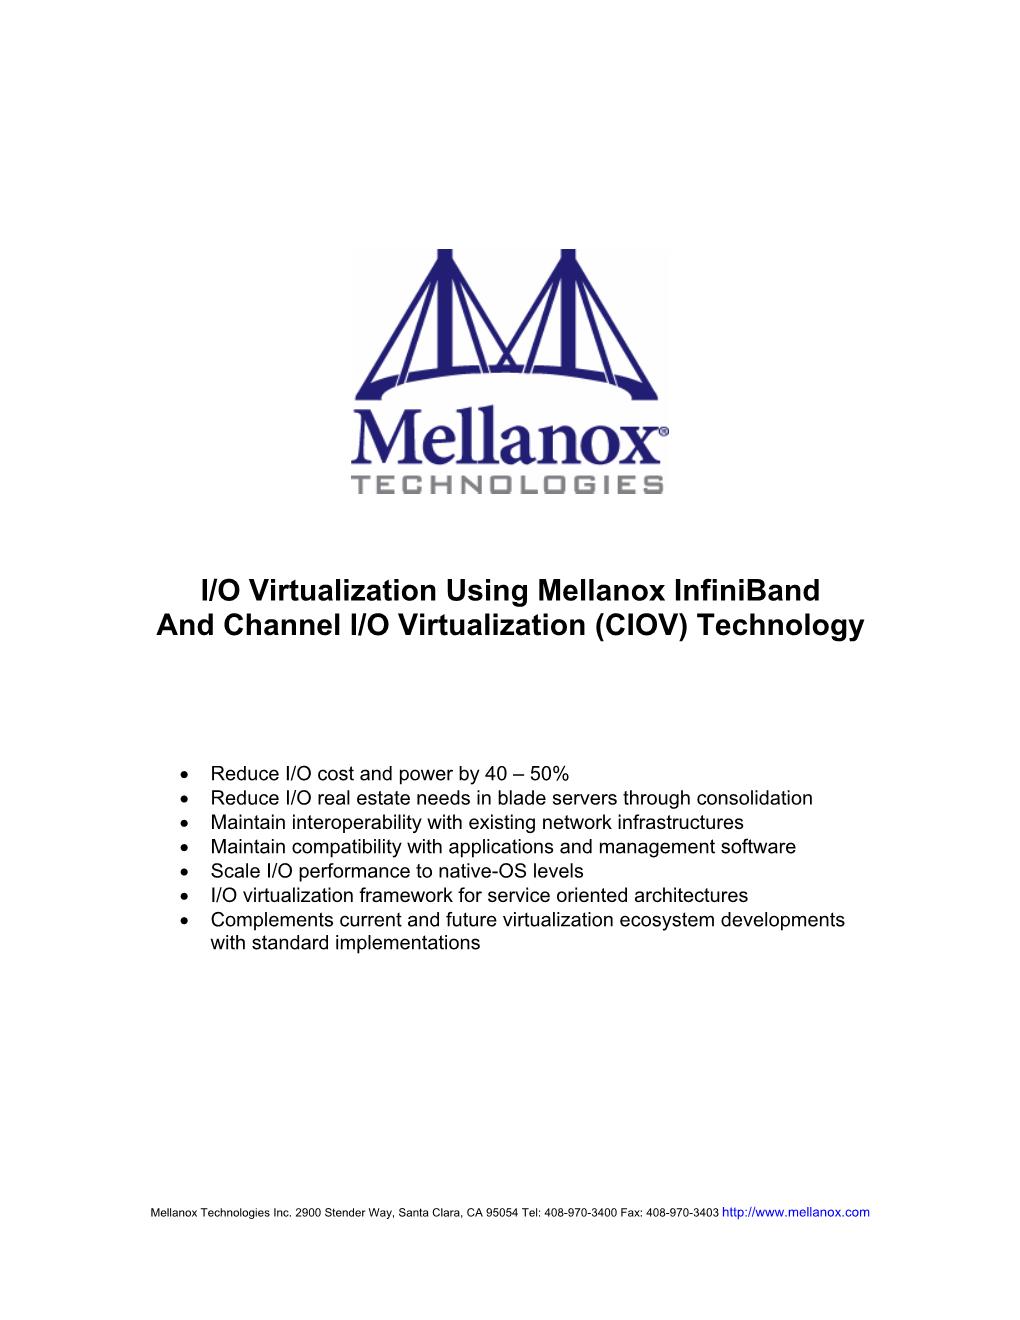 I/O Virtualization Using Mellanox Infiniband and Channel I/O Virtualization (CIOV) Technology